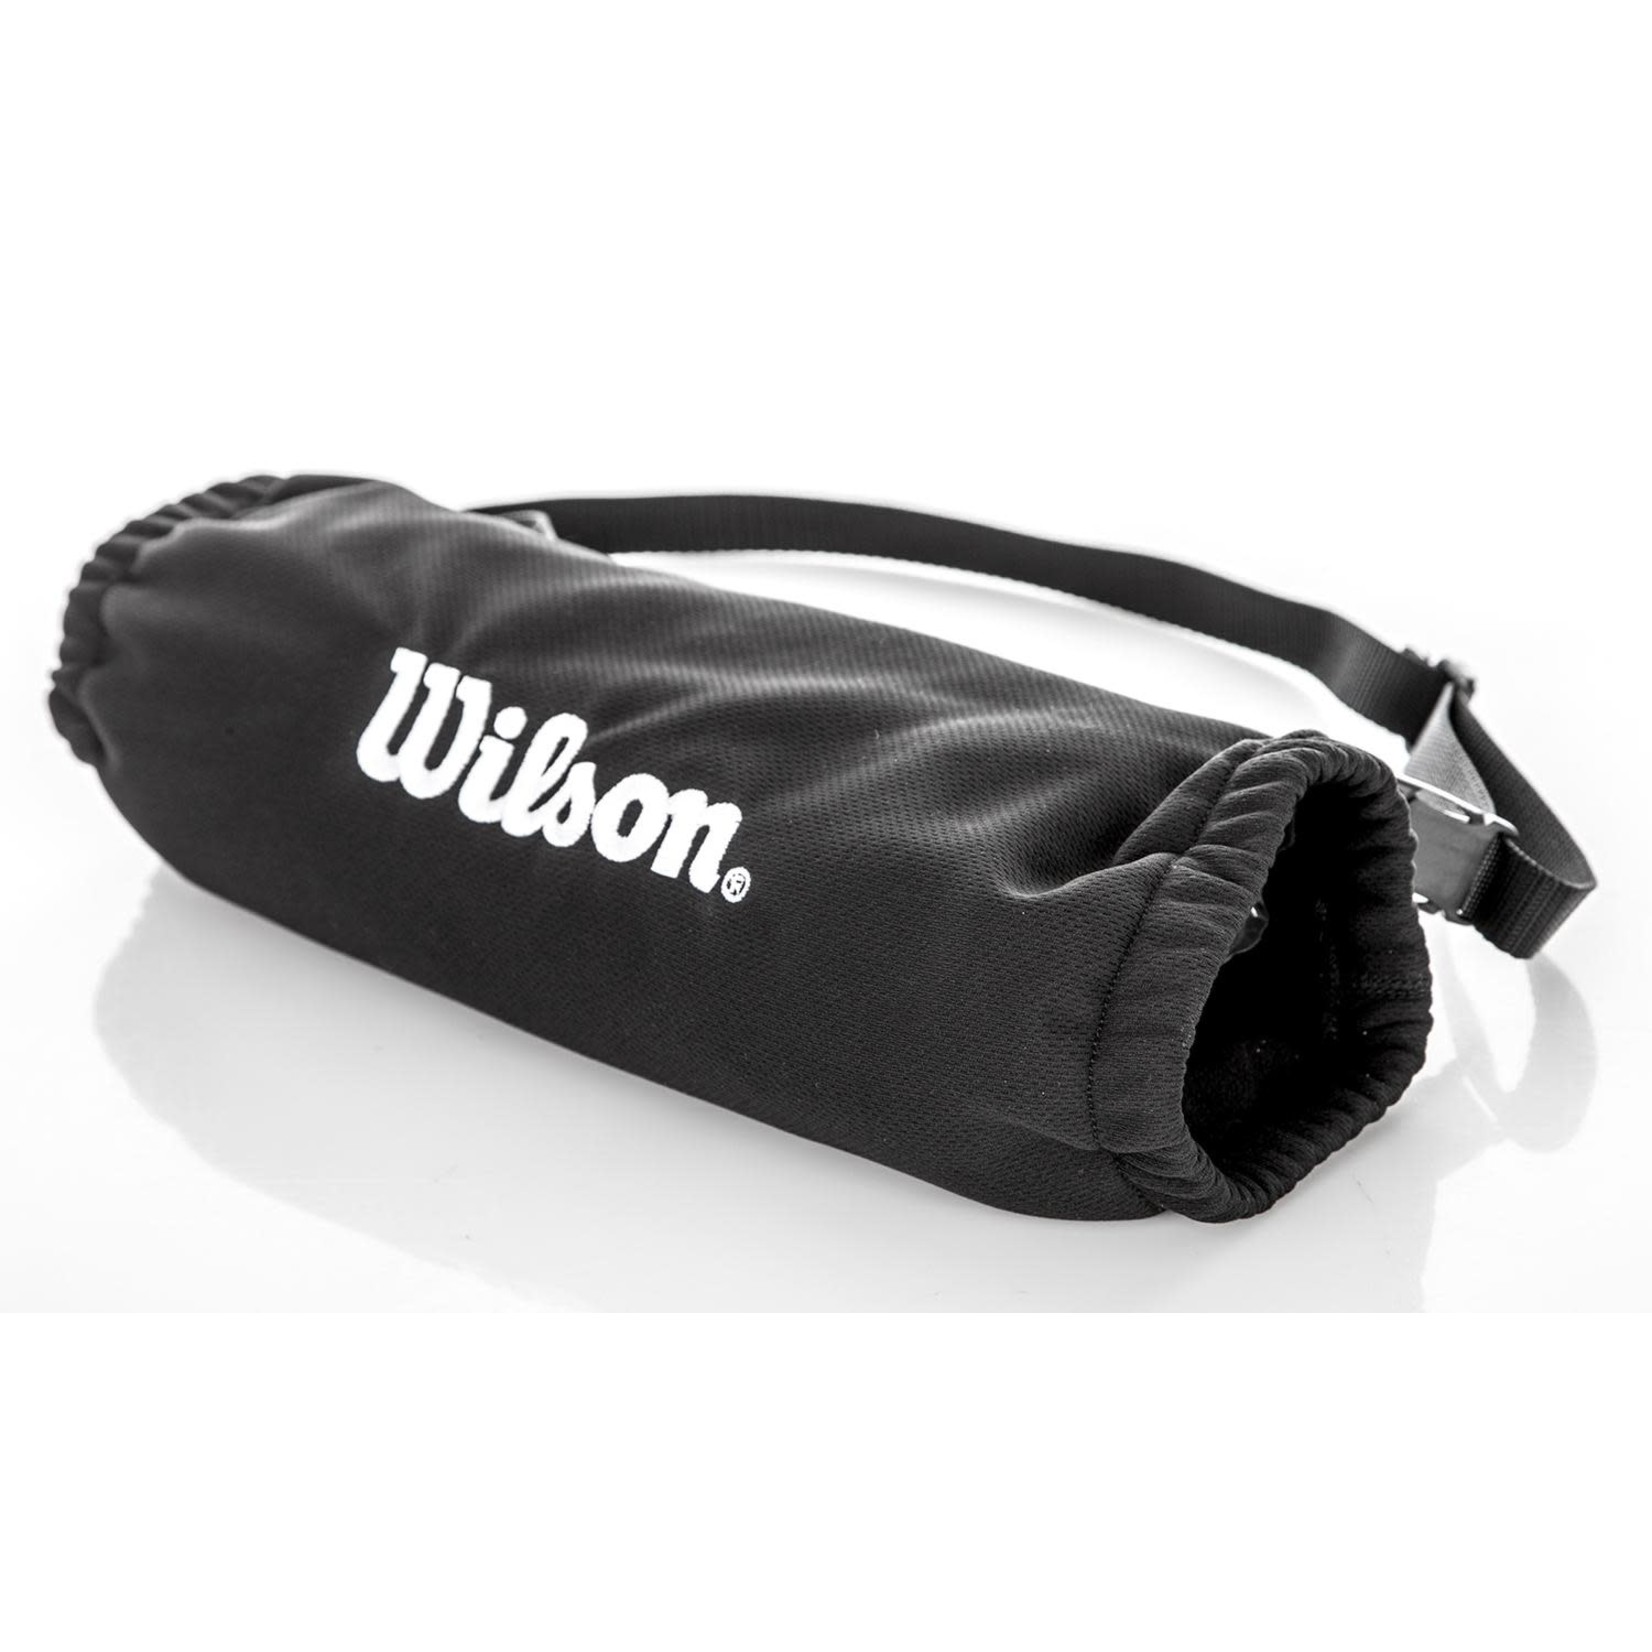 Wilson Wilson Football Hand Warmer